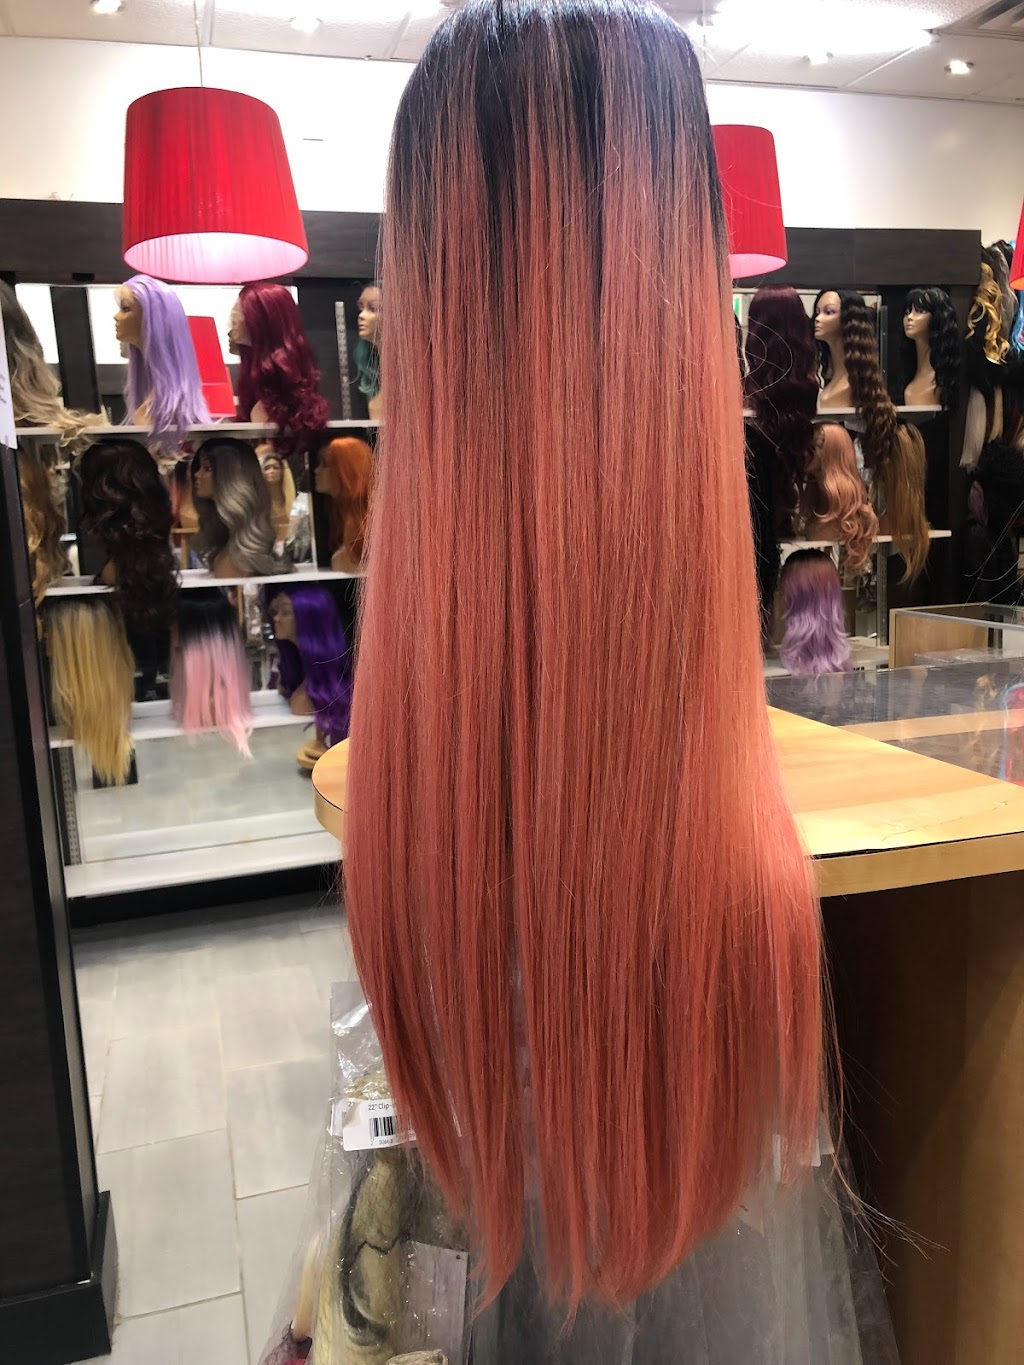 F&T Beauty Wigs | store | 700 Nairn Ave, Winnipeg, MB R2L 0X7, Canada | 2048696925 OR +1 204-869-6925